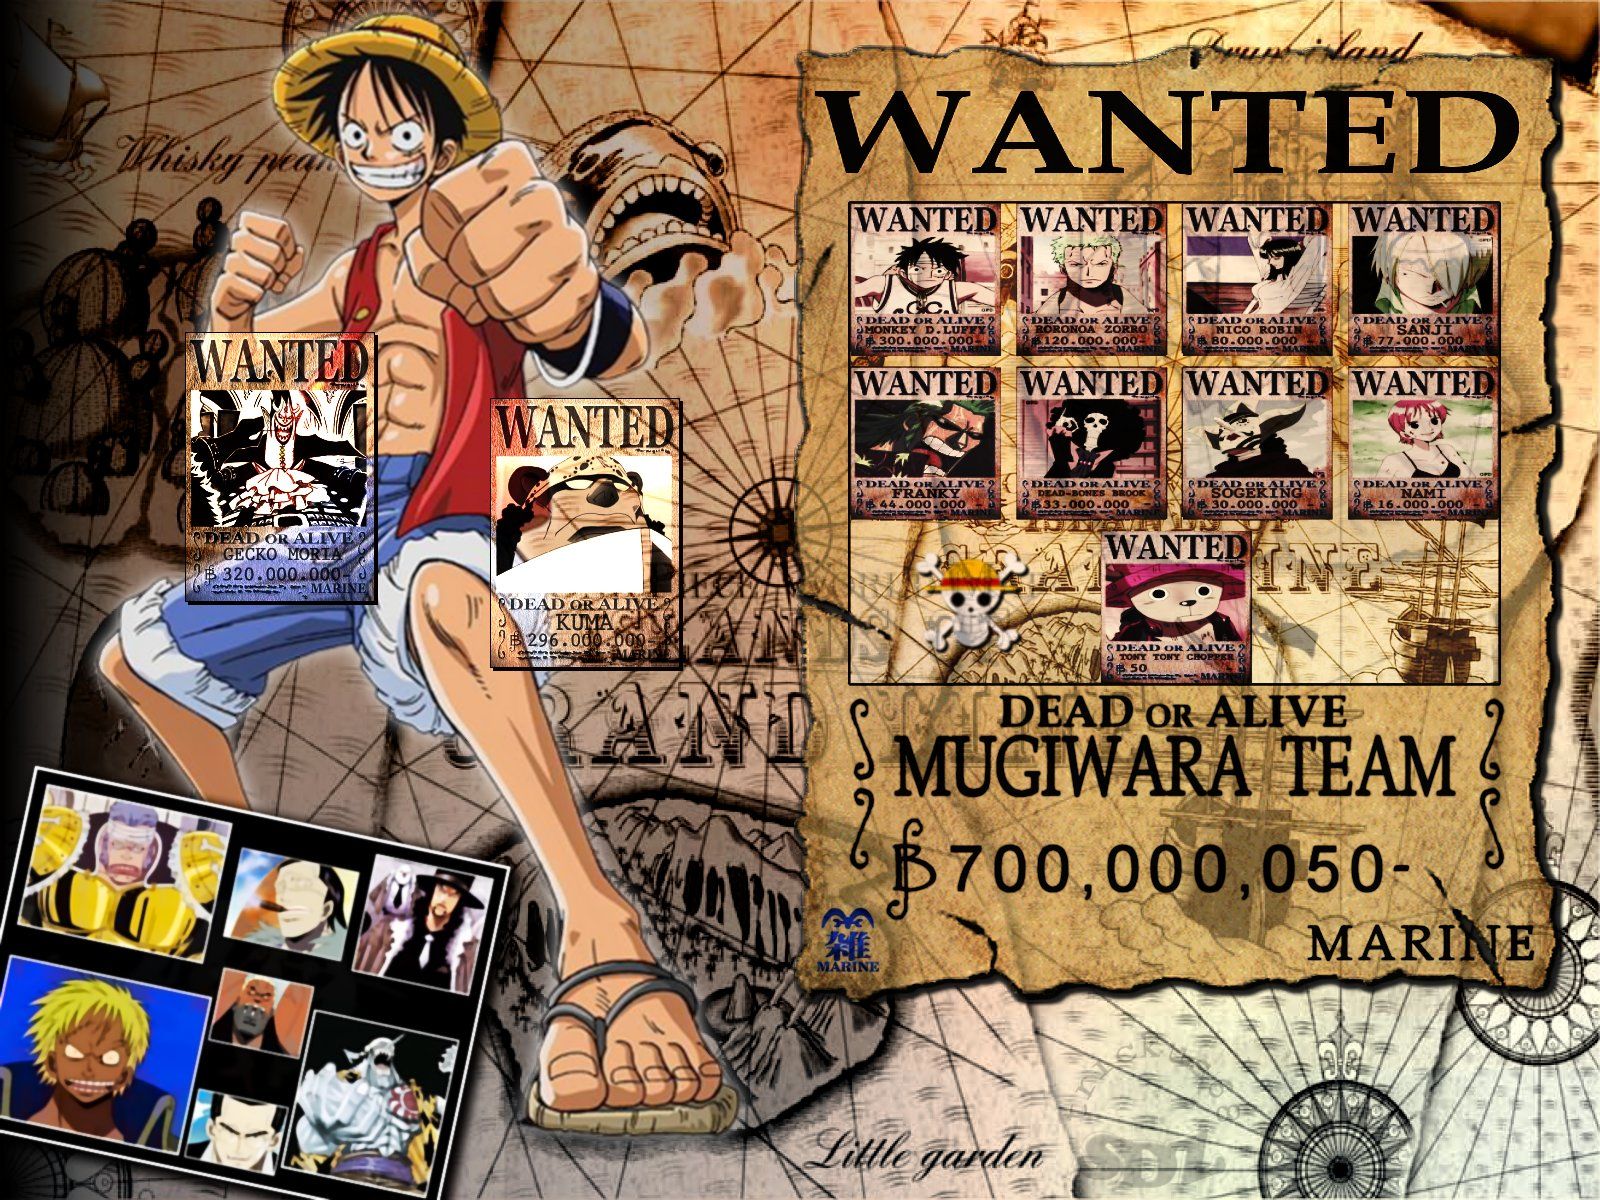 One Piece Wanted Wallpaper Fond d39;ecran wanted one piece